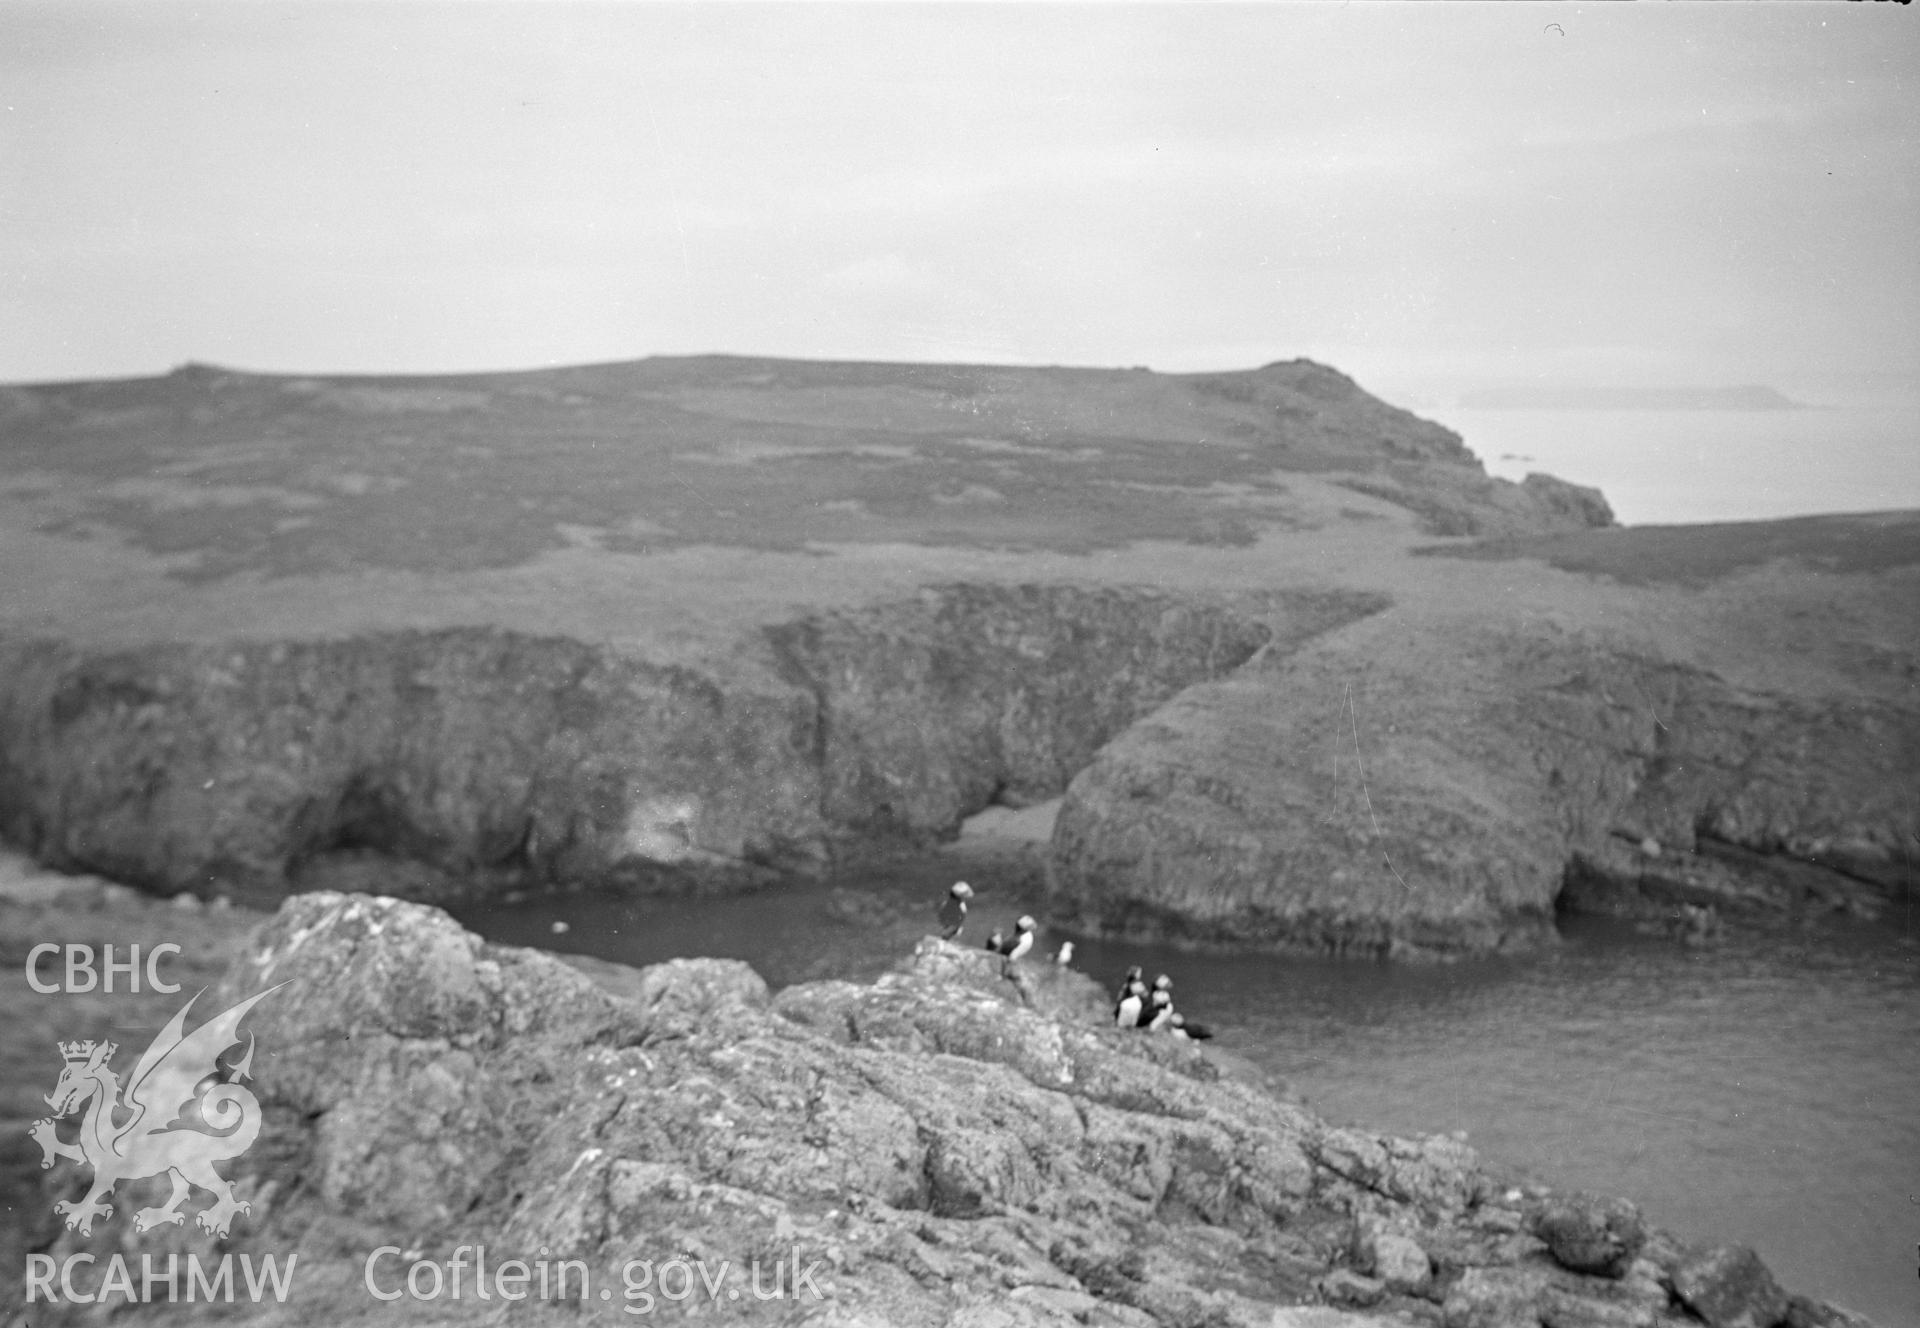 Digital copy of a nitrate negative showing view of Skomer Island taken by Leonard Monroe, June 1950.